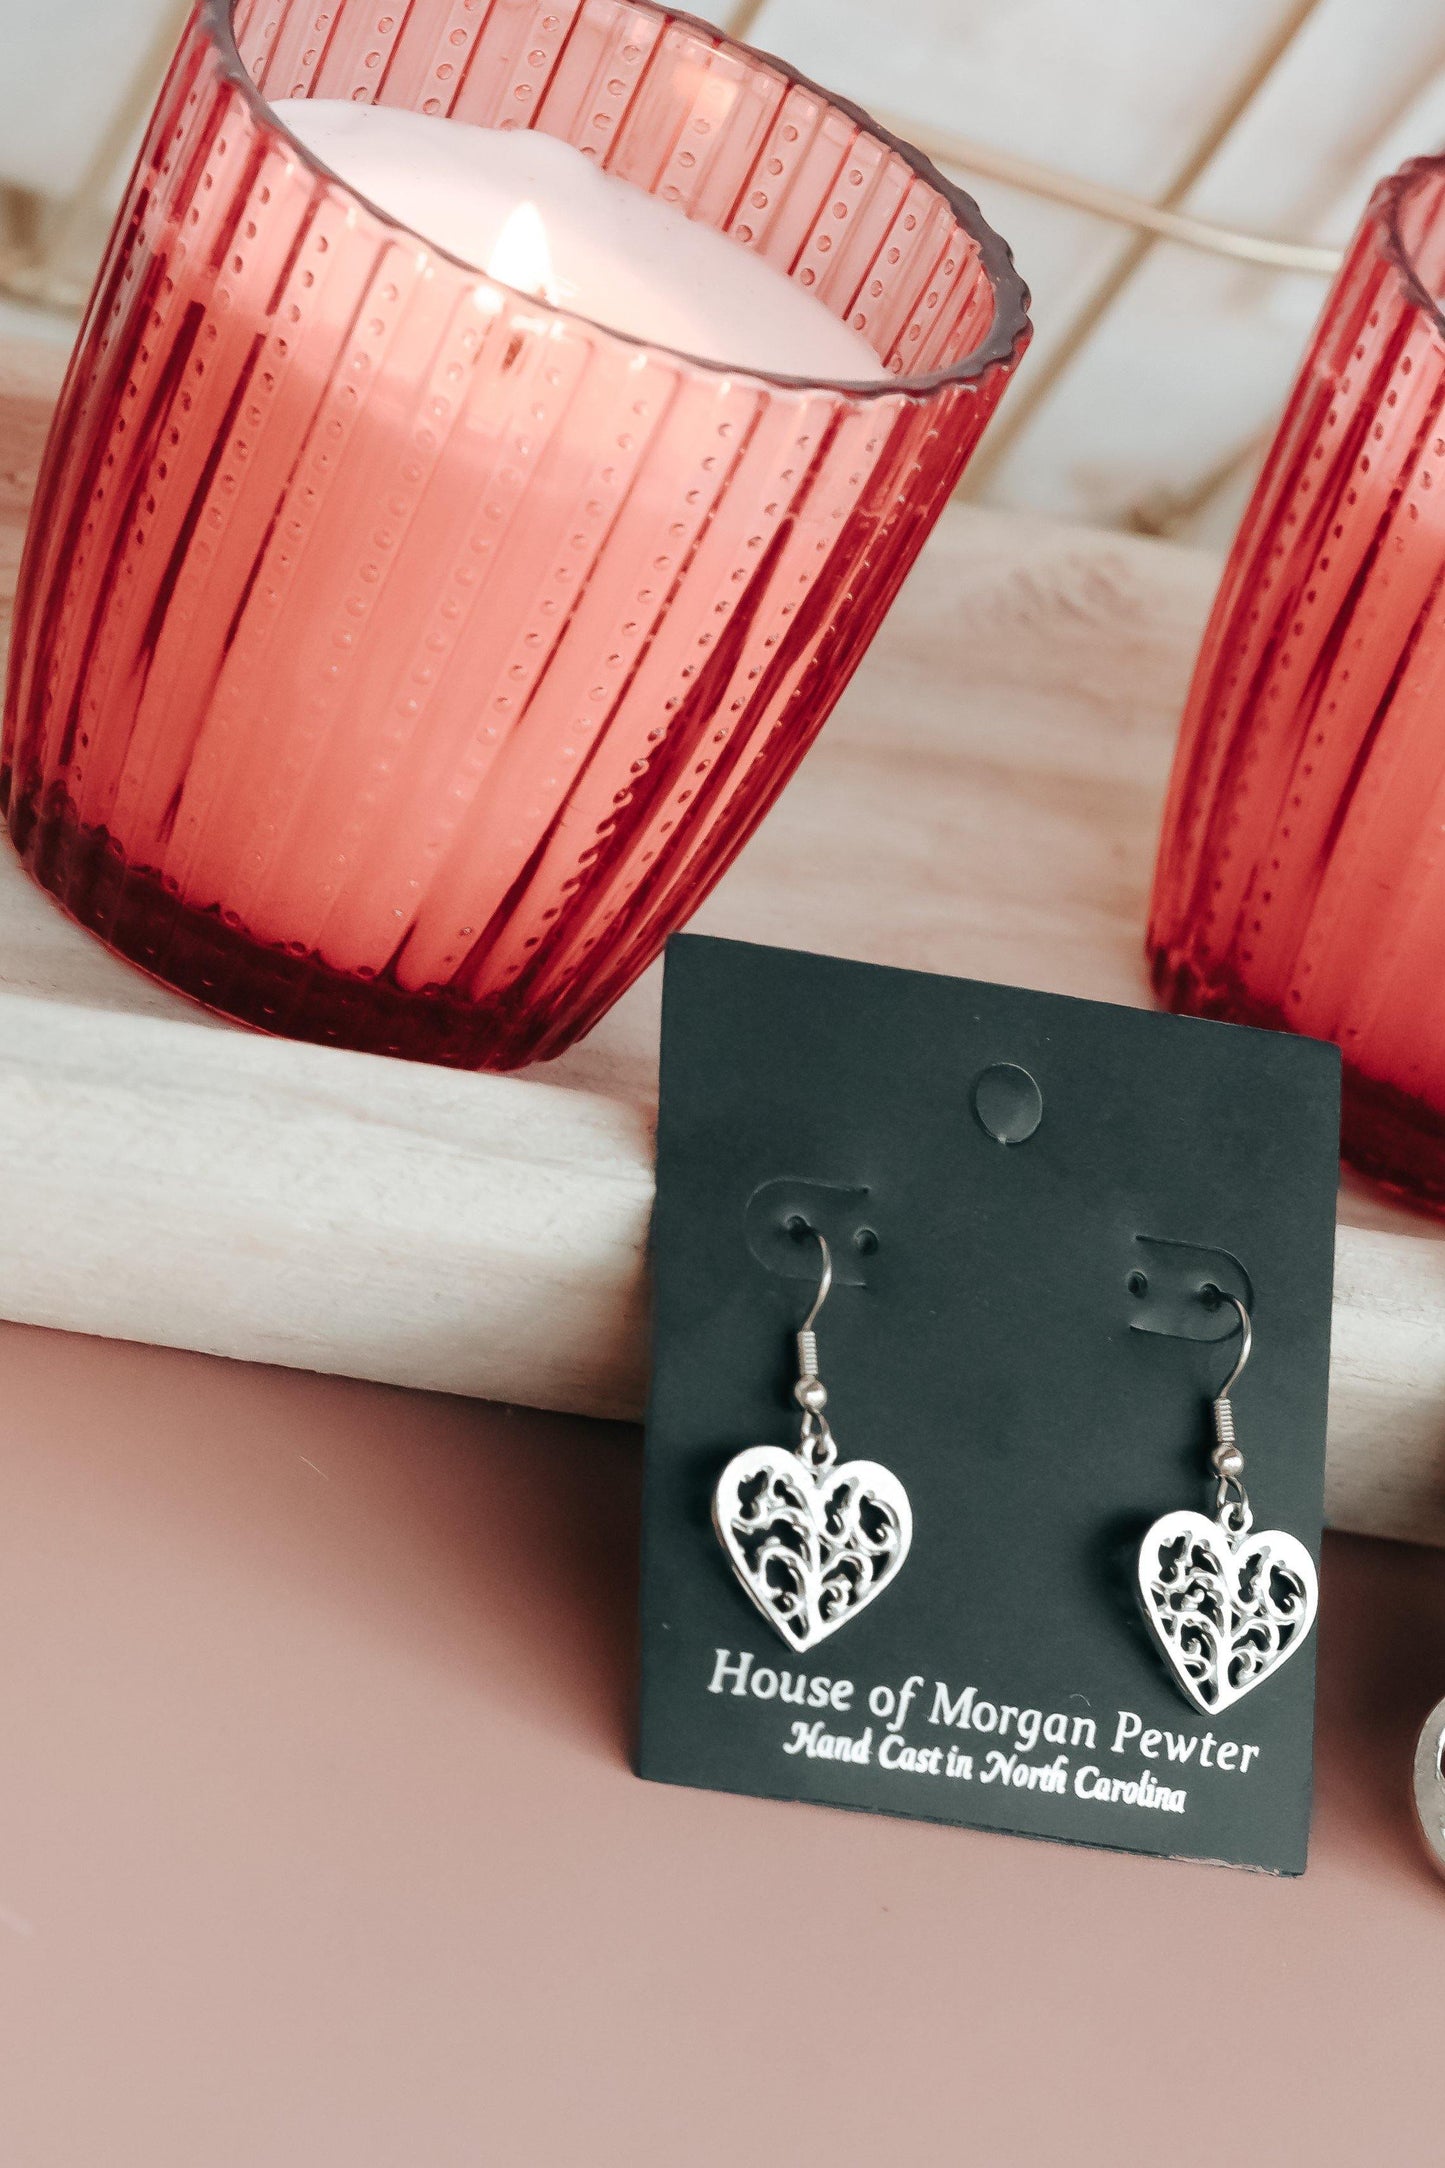 Handmade Pewter Earring Jewelry- Swirly Heart - House of Morgan Pewter